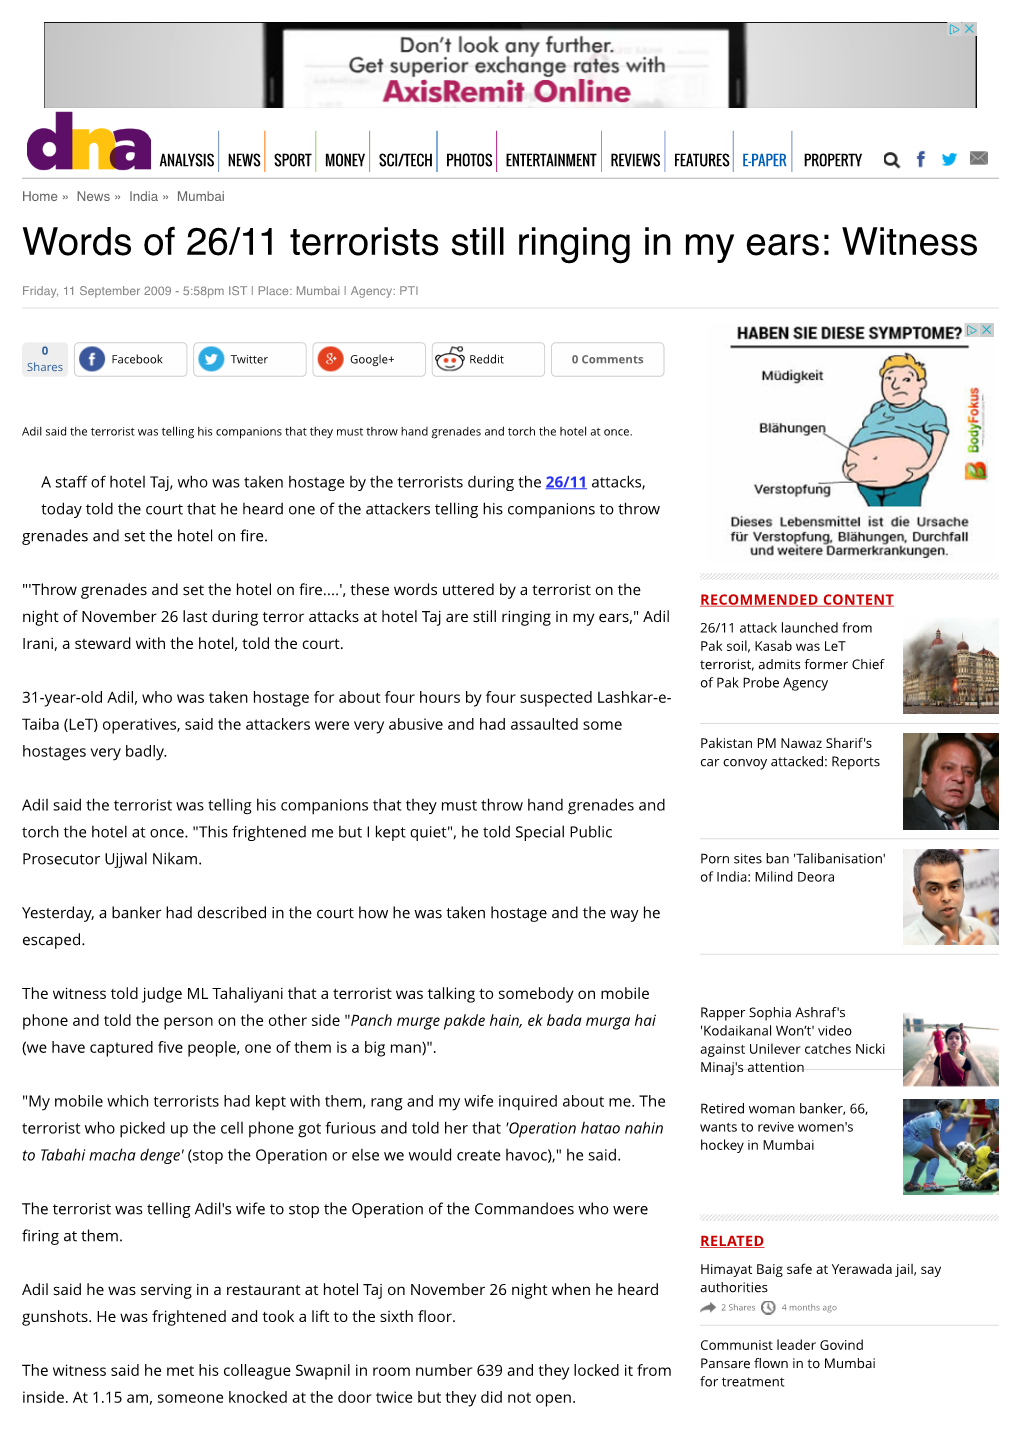 Words of 26/11 Terrorists Still Ringing in My Ears: Witness